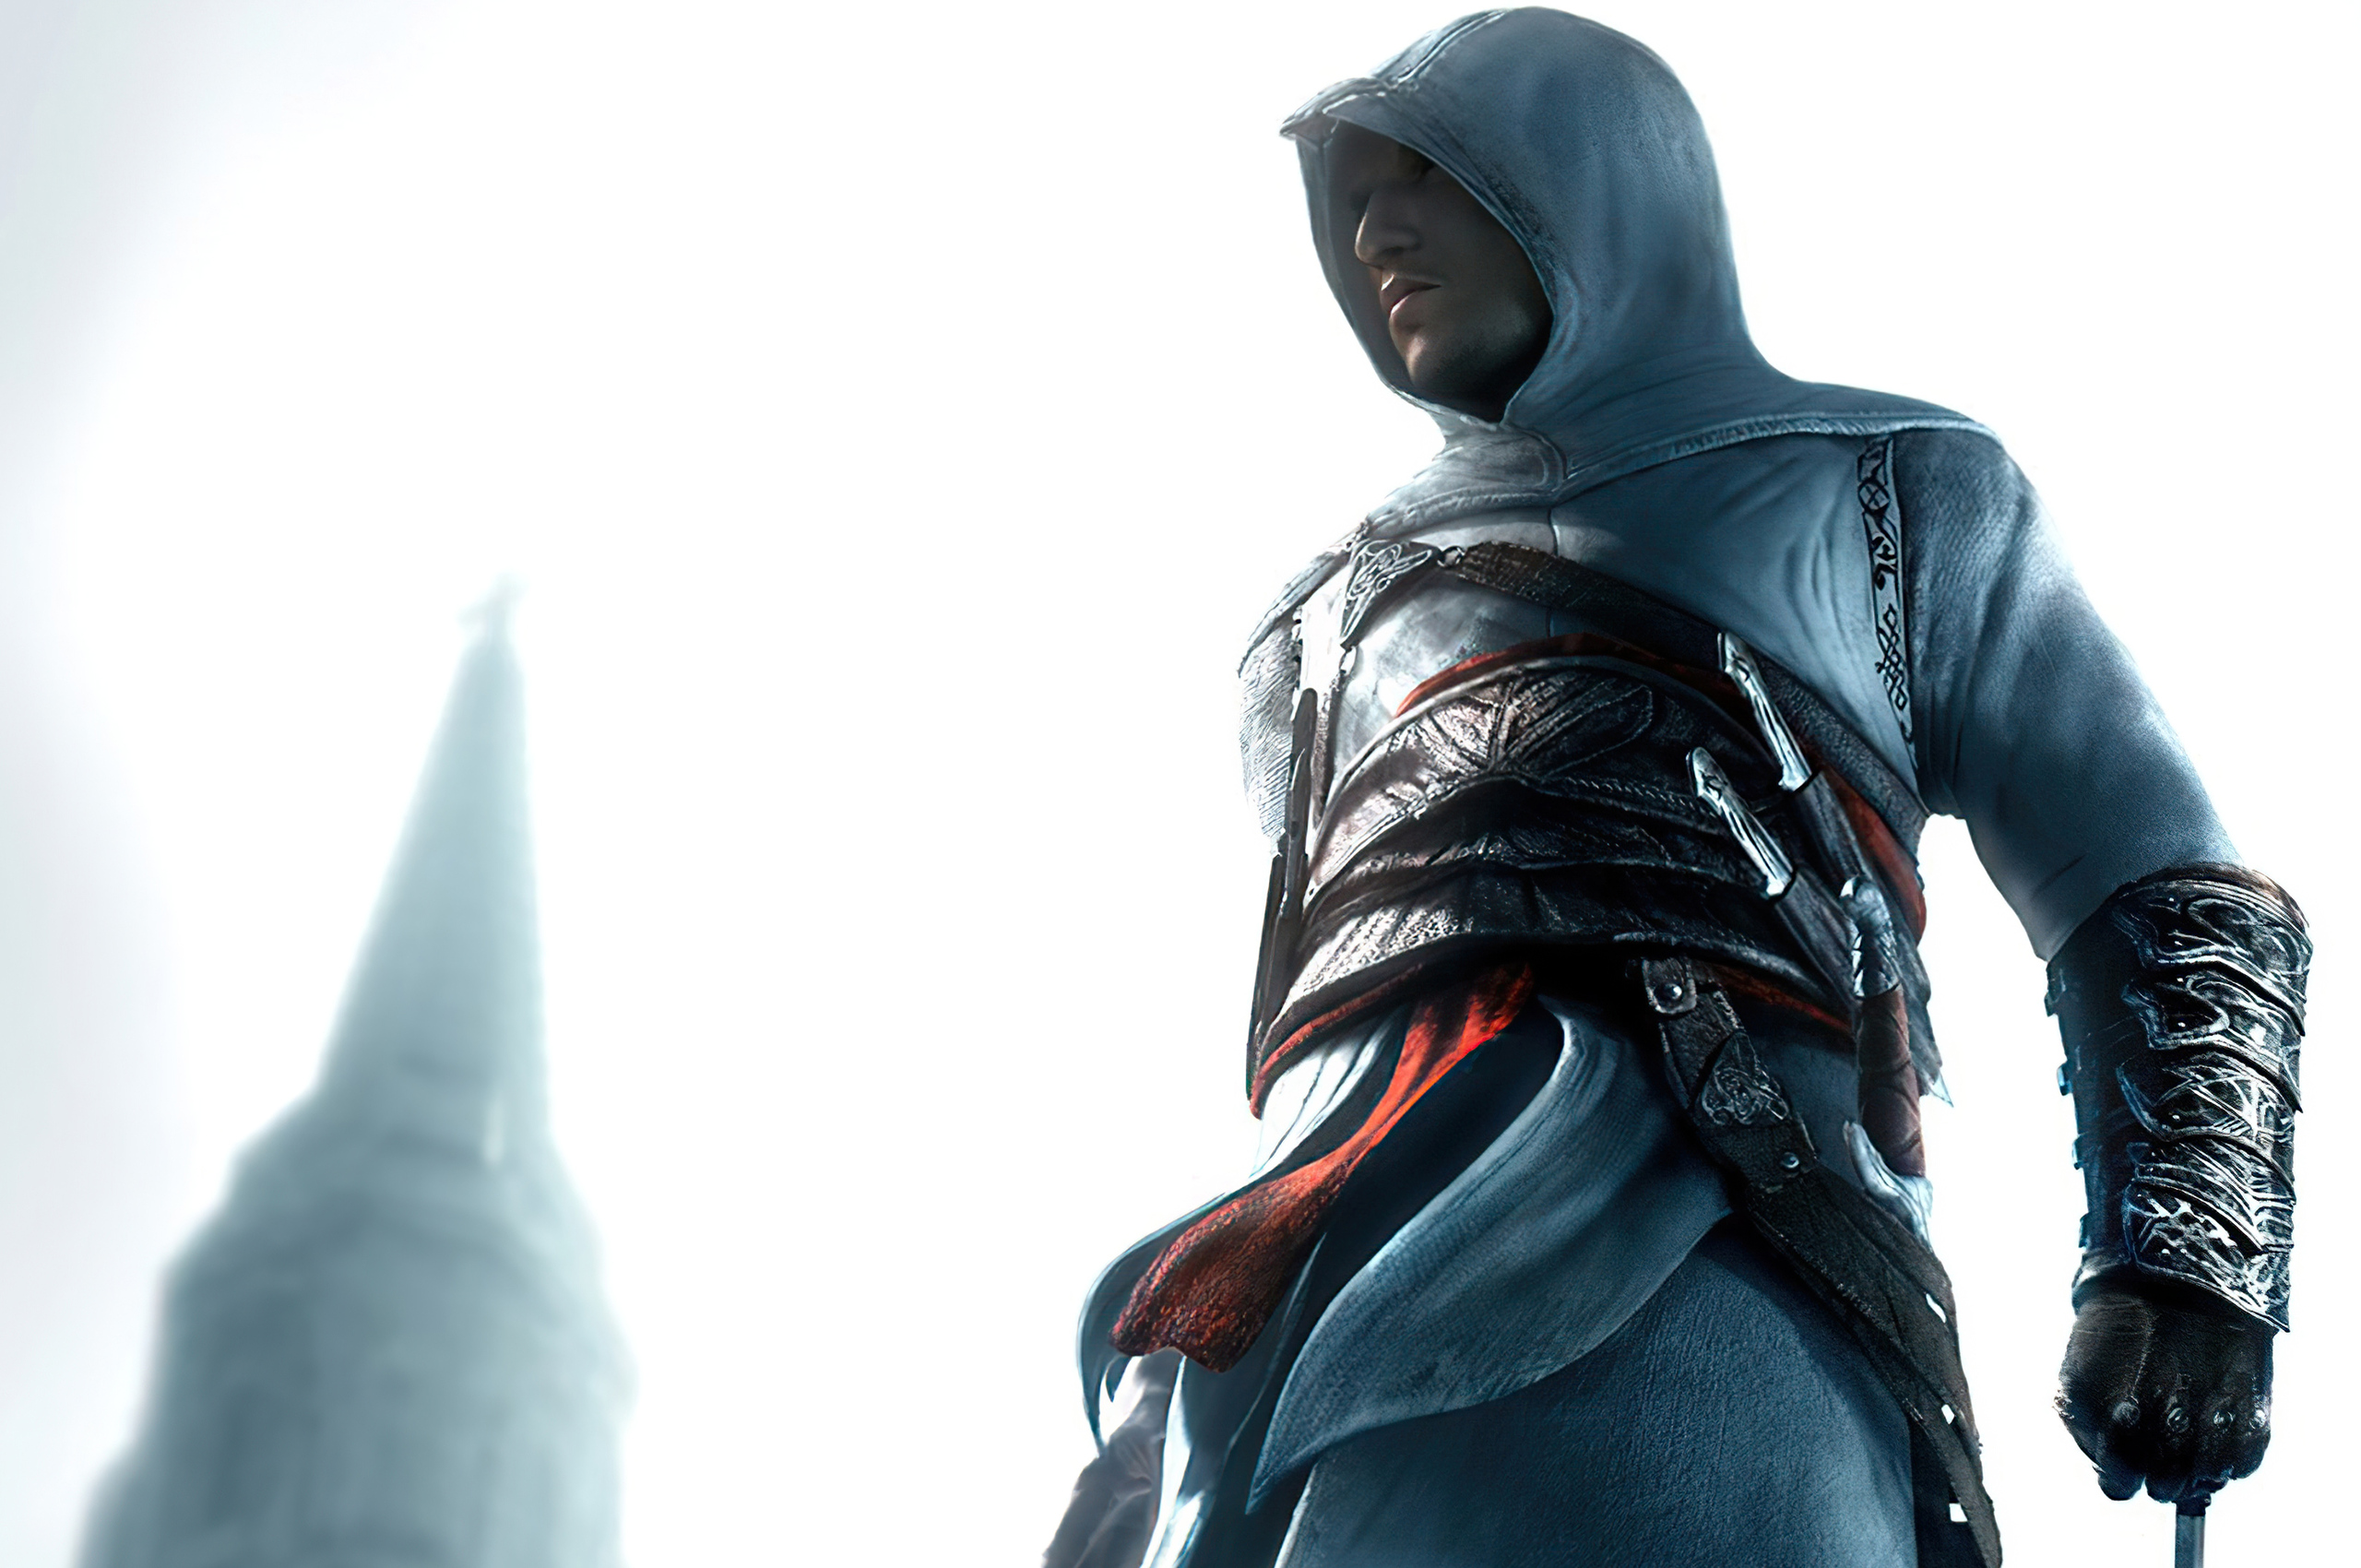 Assassin's creed soundtrack. Самый первый ассасин. Assassin’s Creed (игра) 2007. Ассасин ориджинал. Assassin's Creed first.